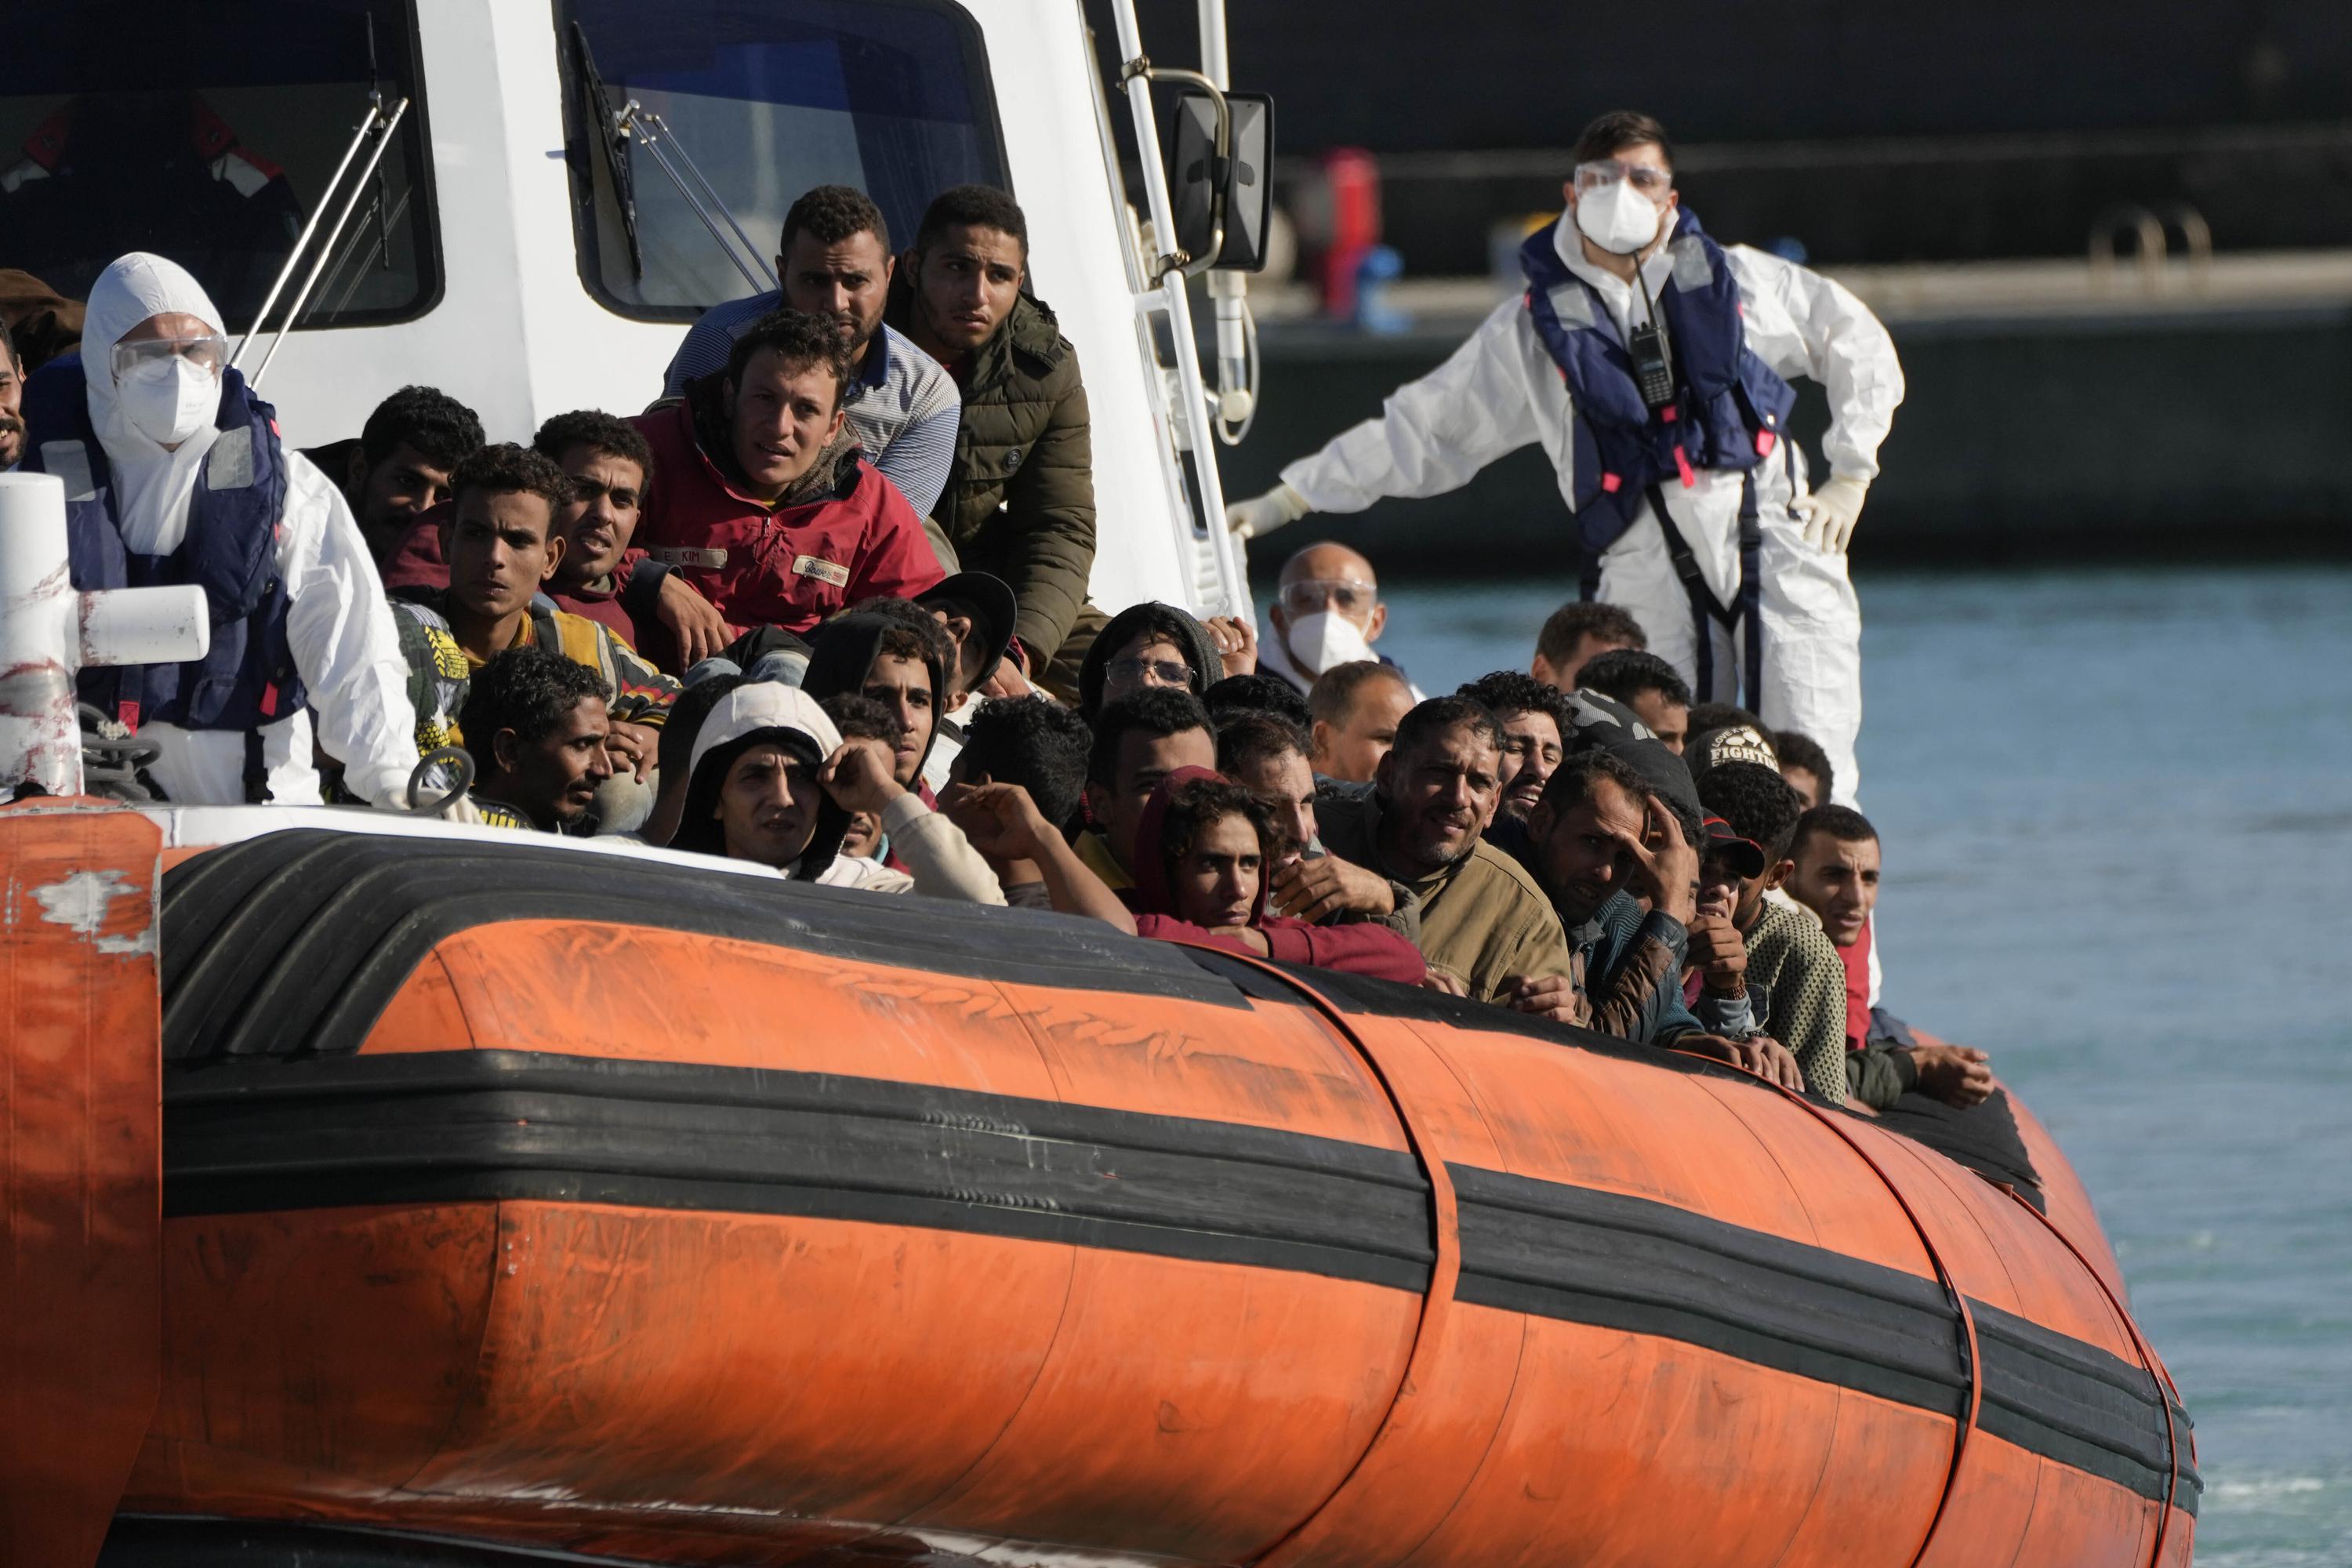 1600-migrants-lost-at-sea-in-mediterranean-this-year-ap-news